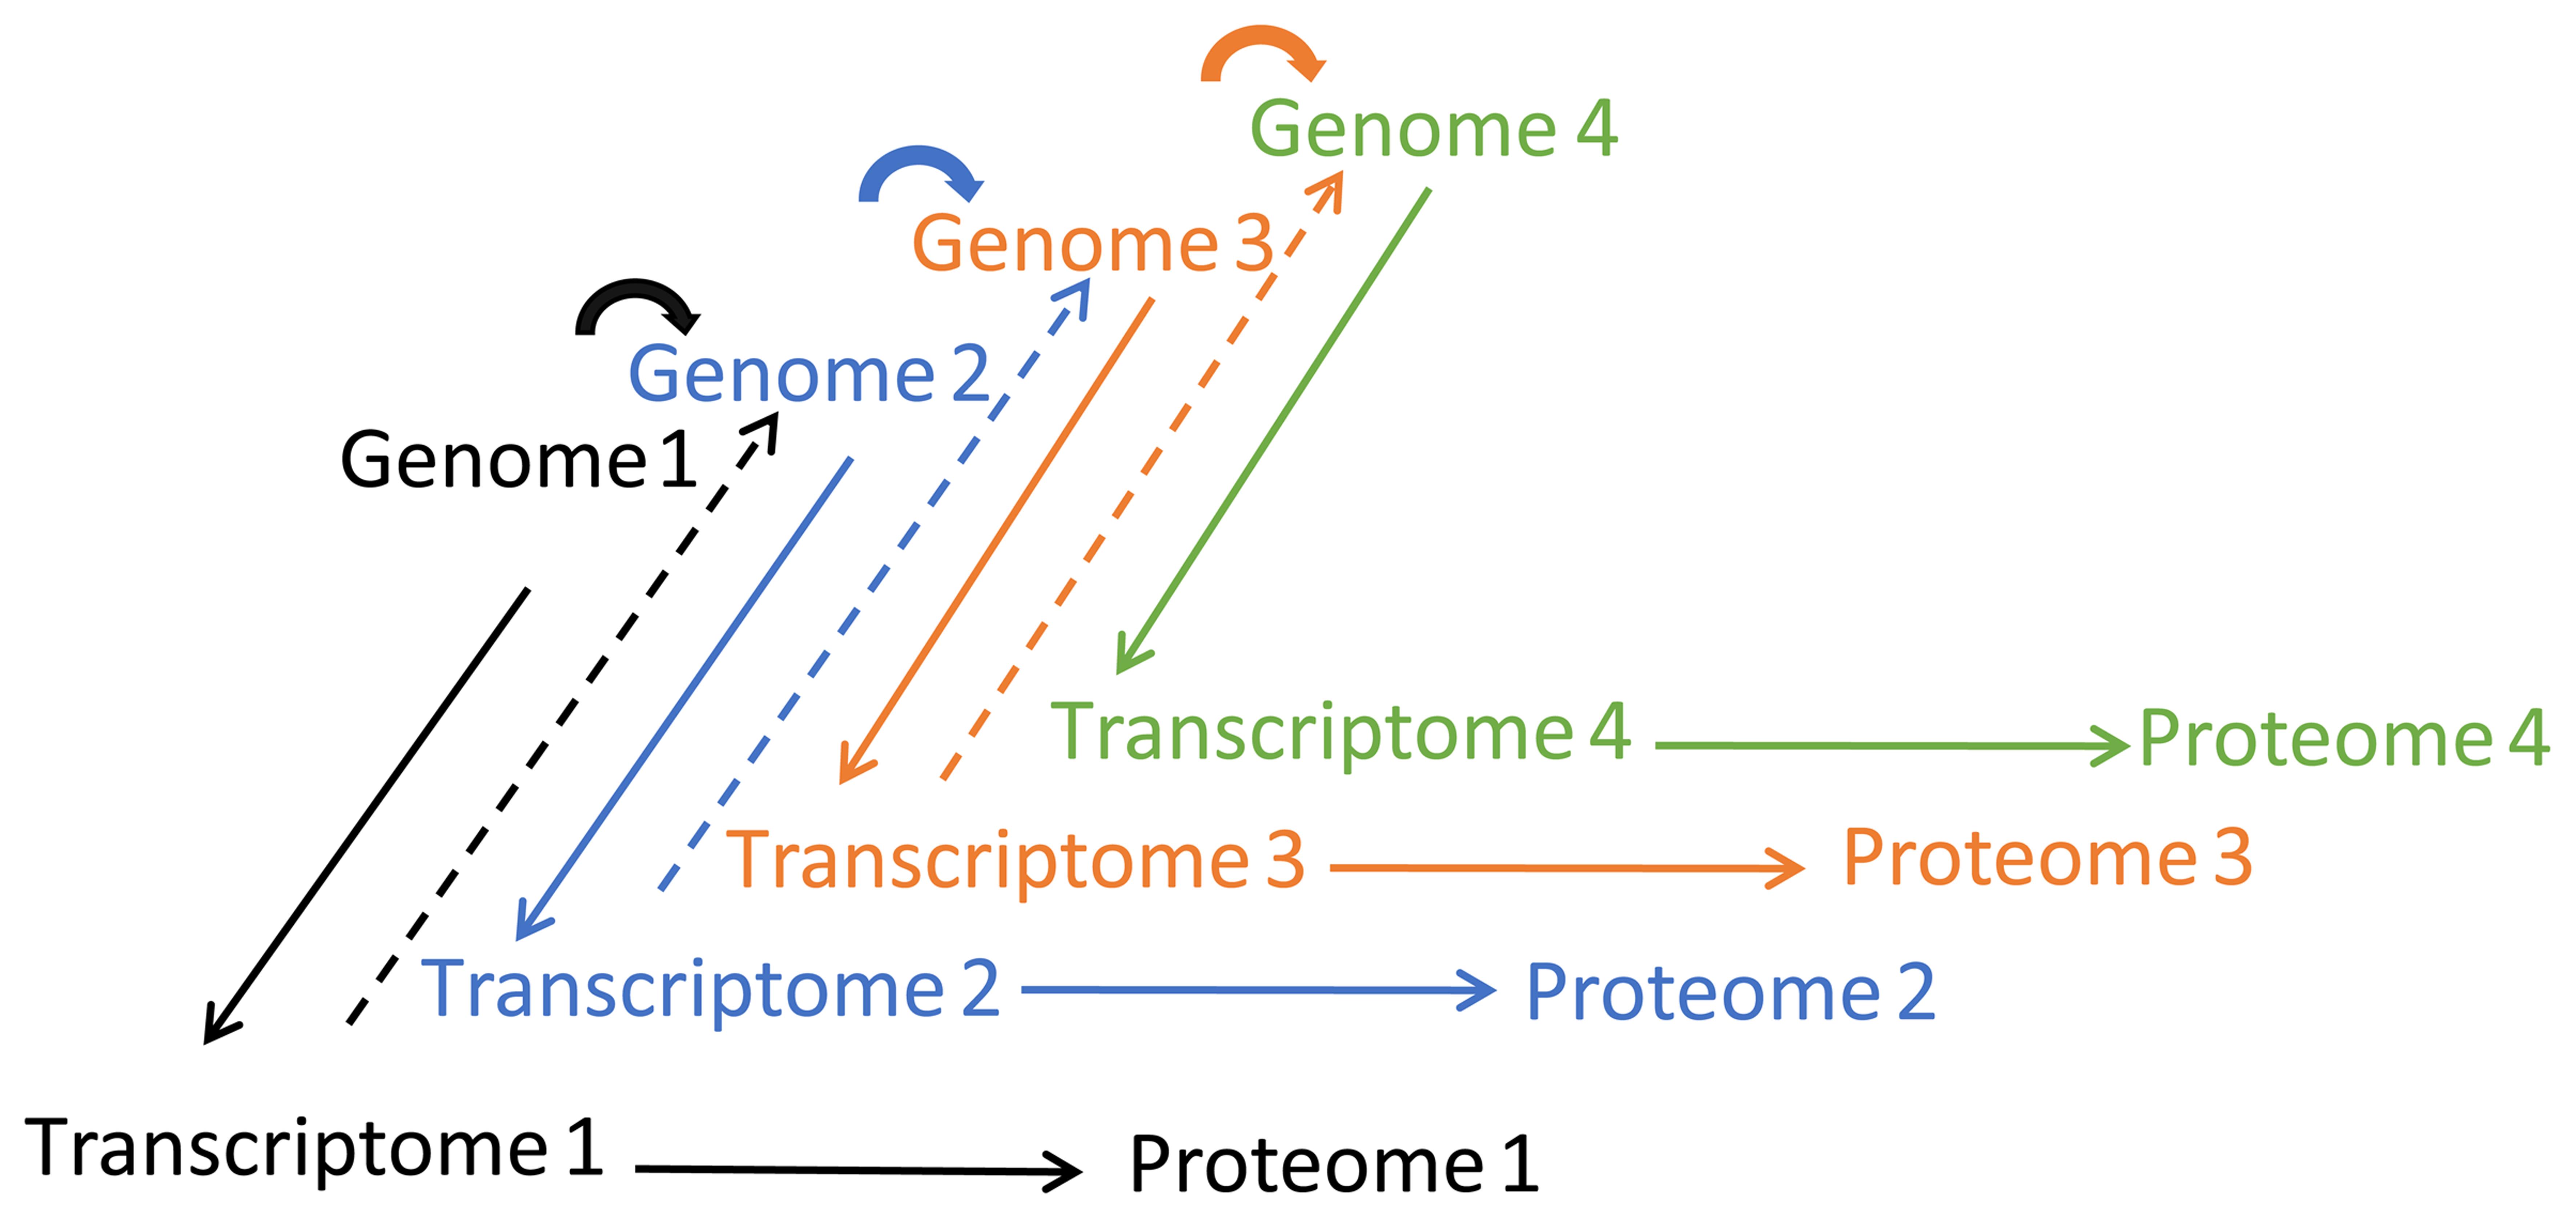 The diagram describes the genome evolution and evolution of gene expression (transcriptome and proteome evolution).